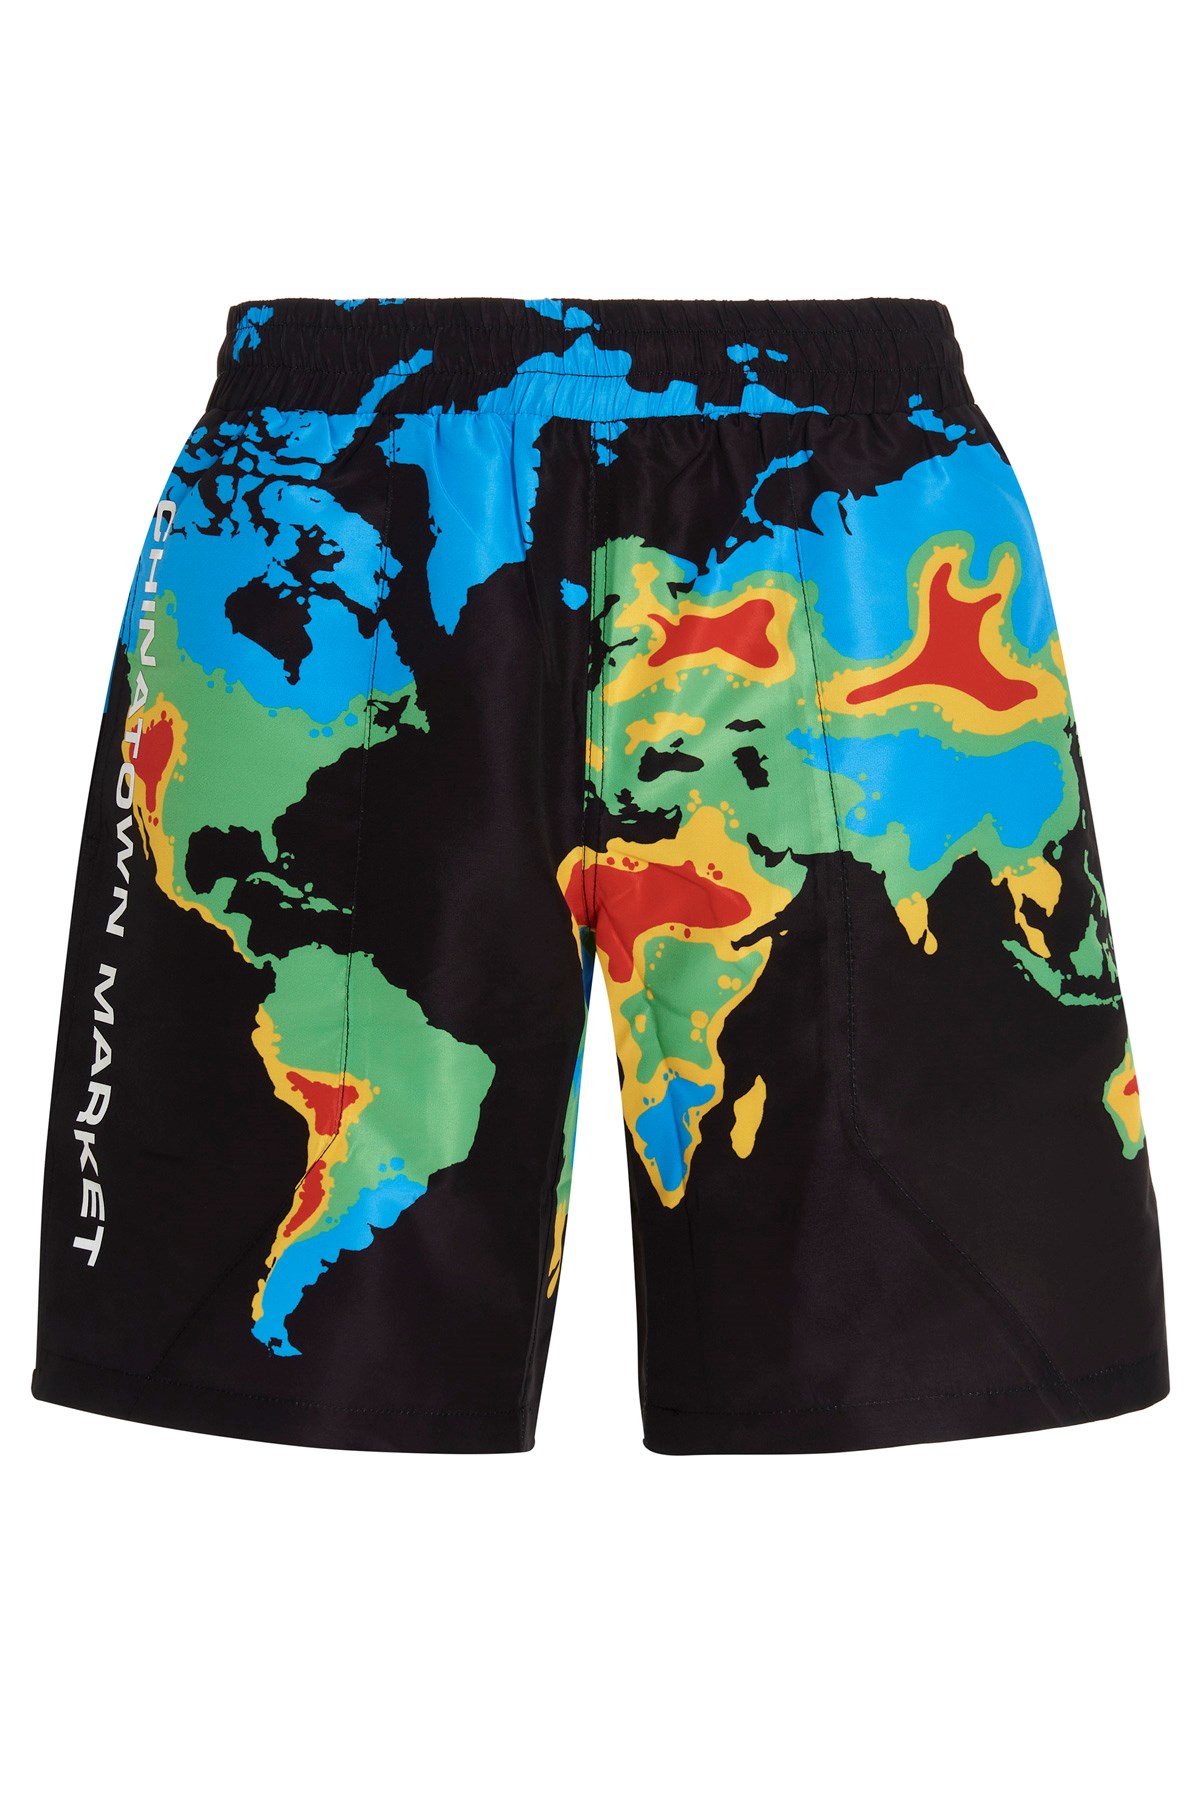 CHINATOWN MARKET Bermuda-Shorts 'Global Citizen Heat Map'